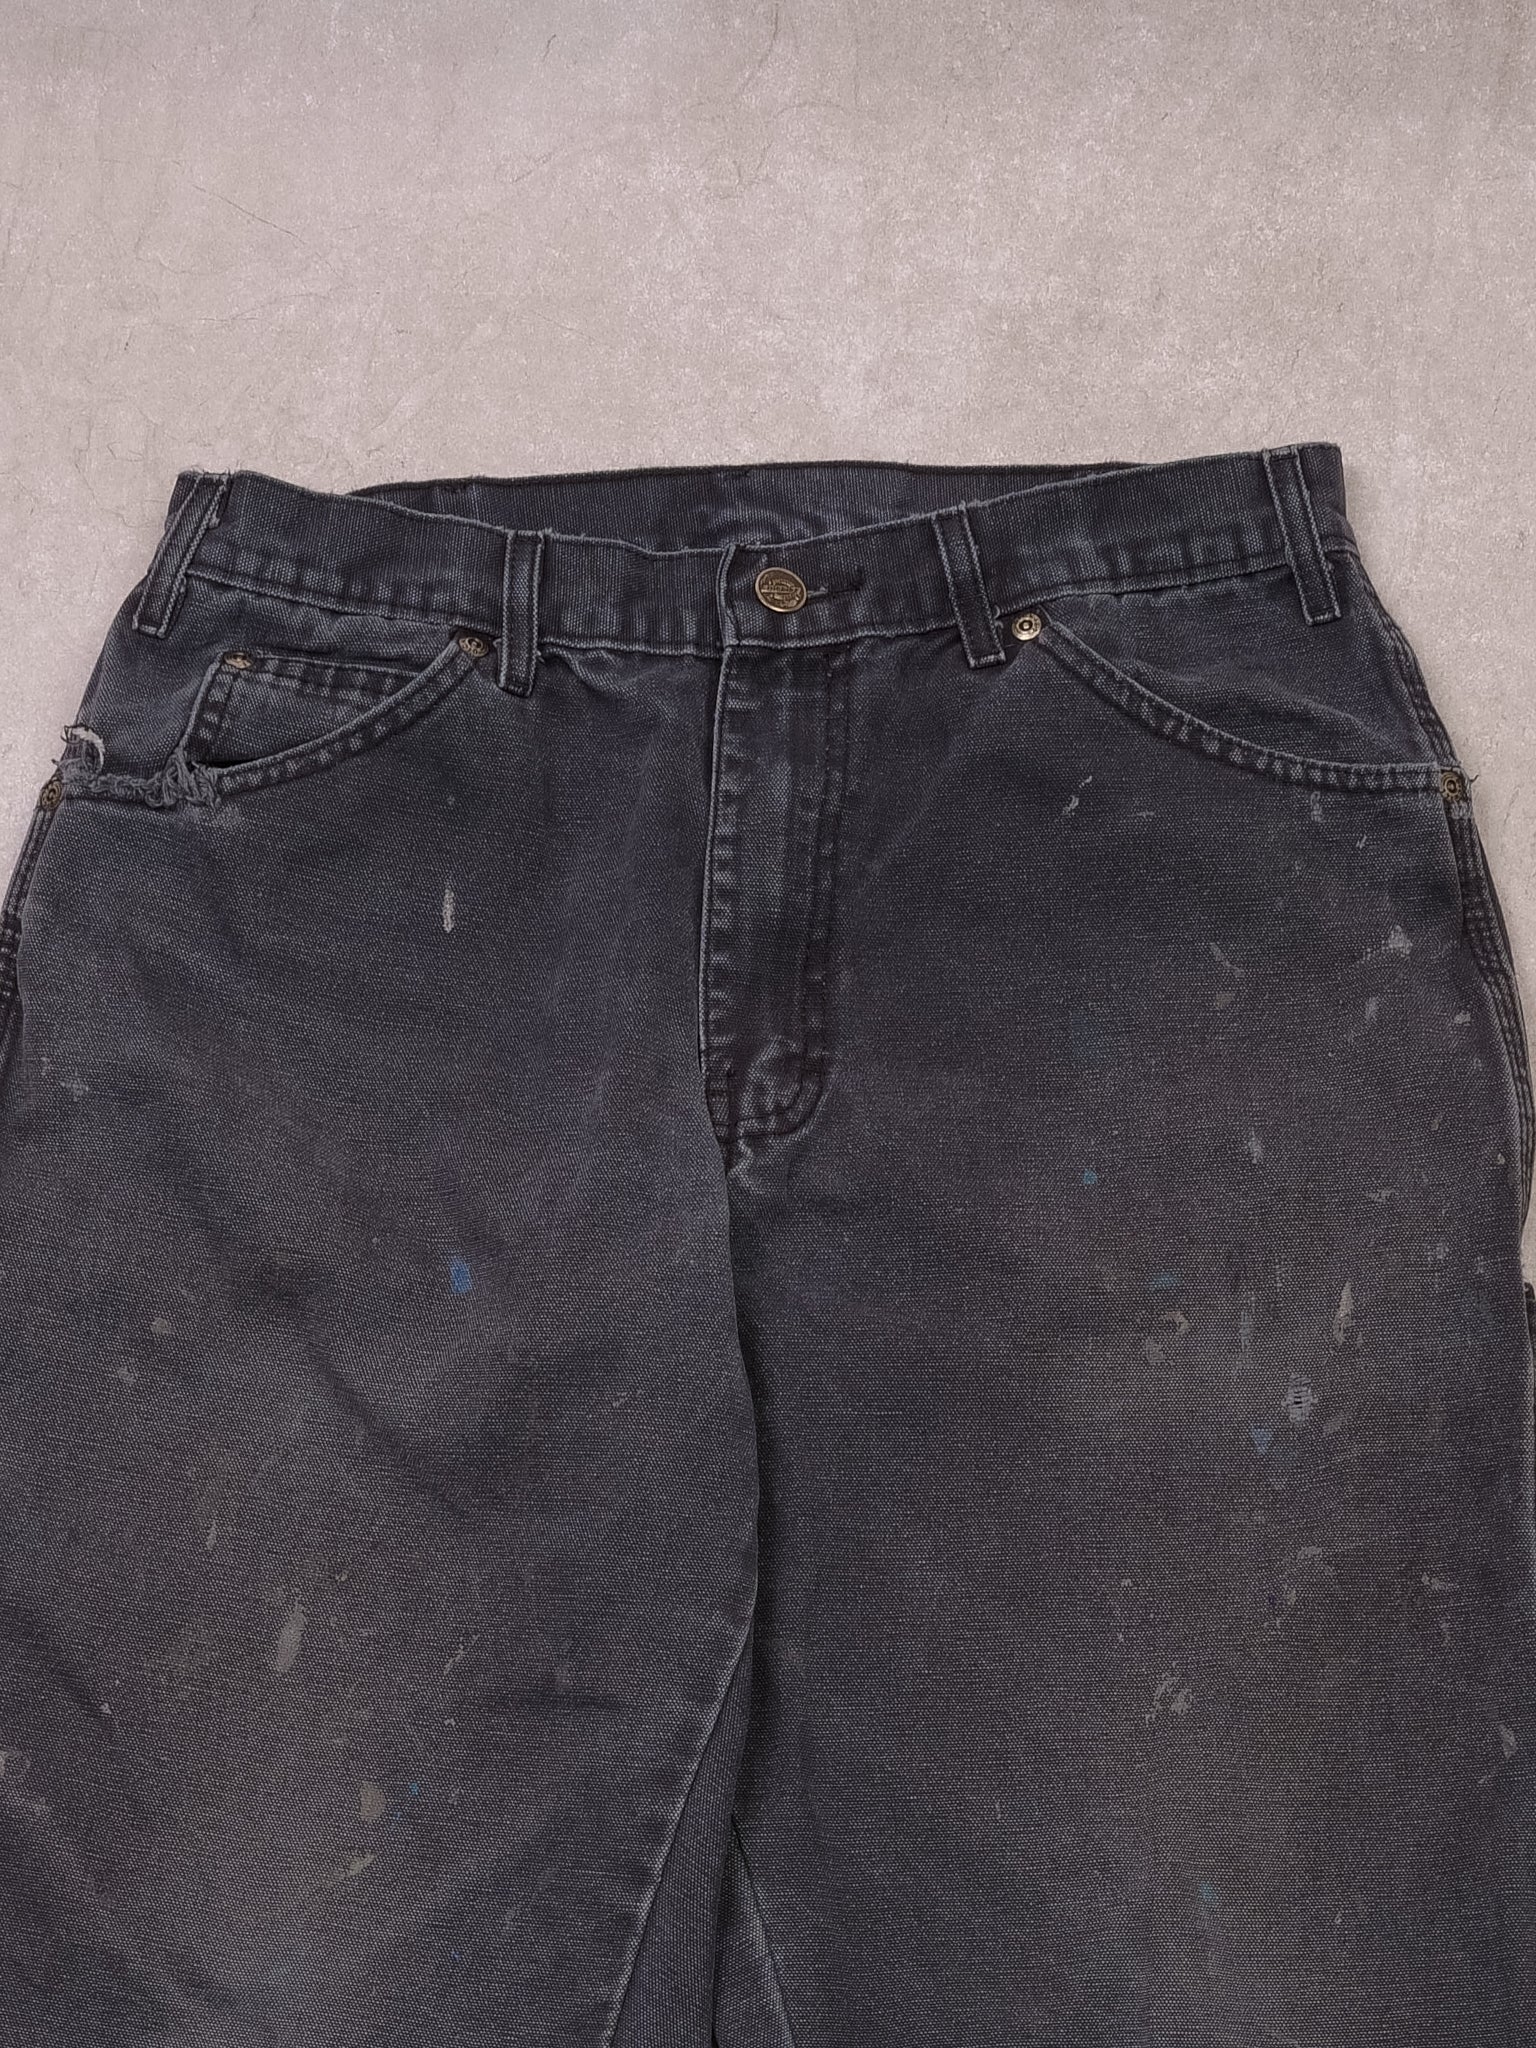 Vintage washed Blue Dickies Carpenter Pants (28x27)